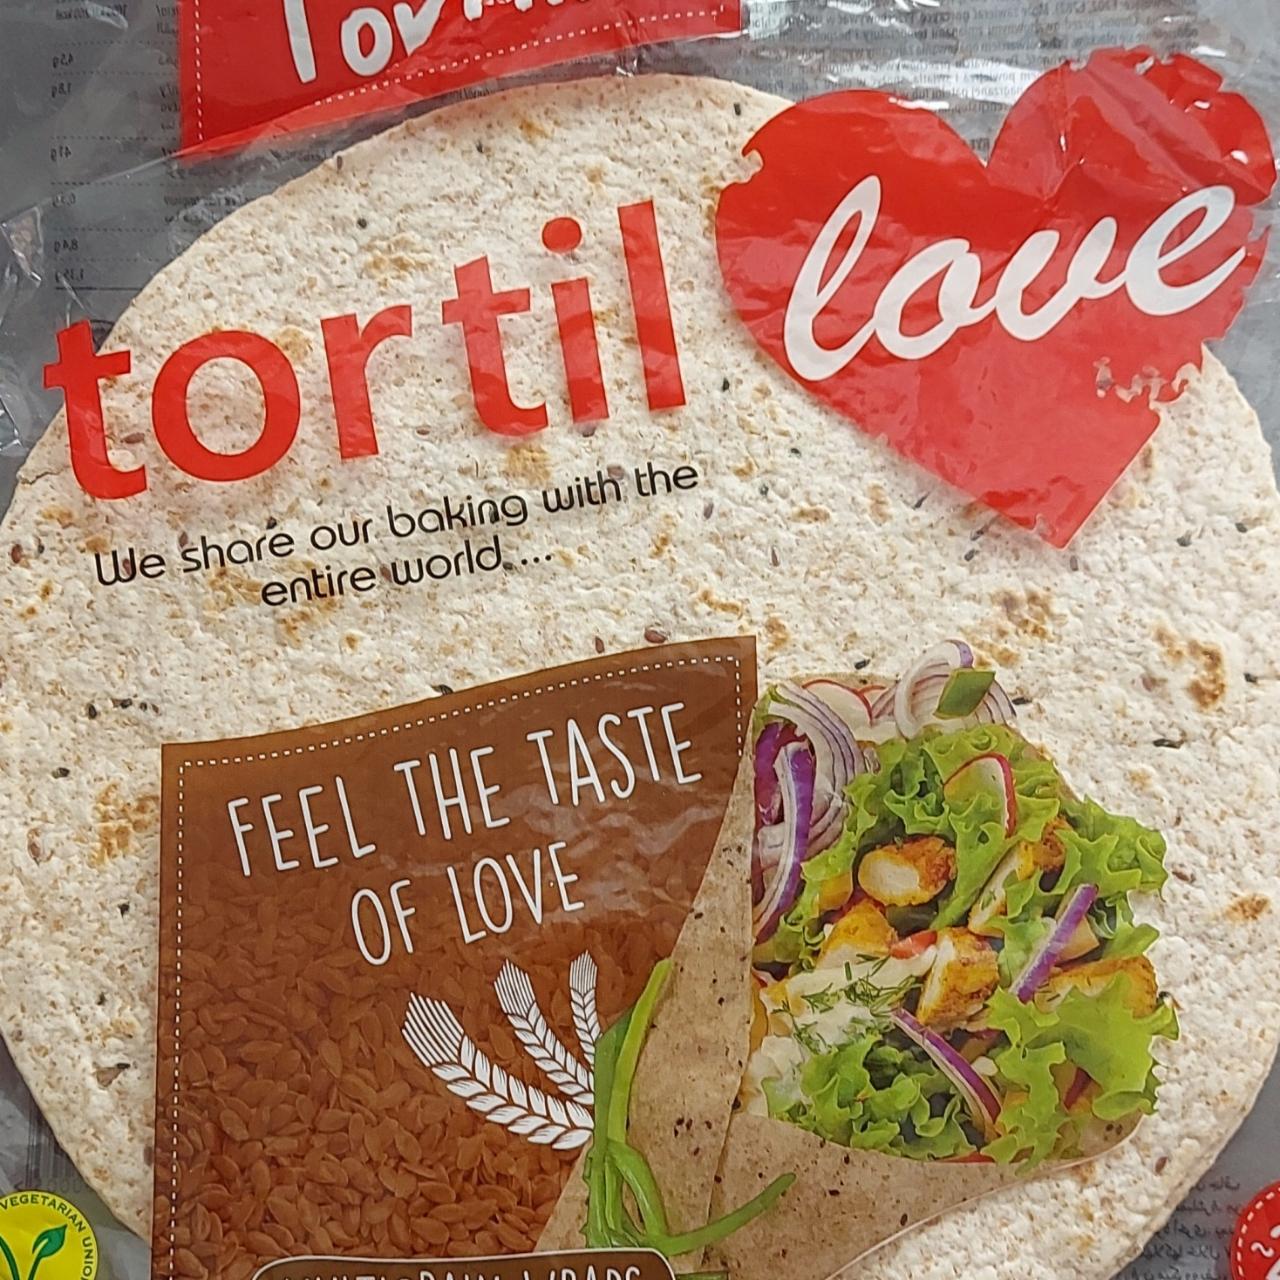 Fotografie - Tortilla Multigrain Wraps Tortil love